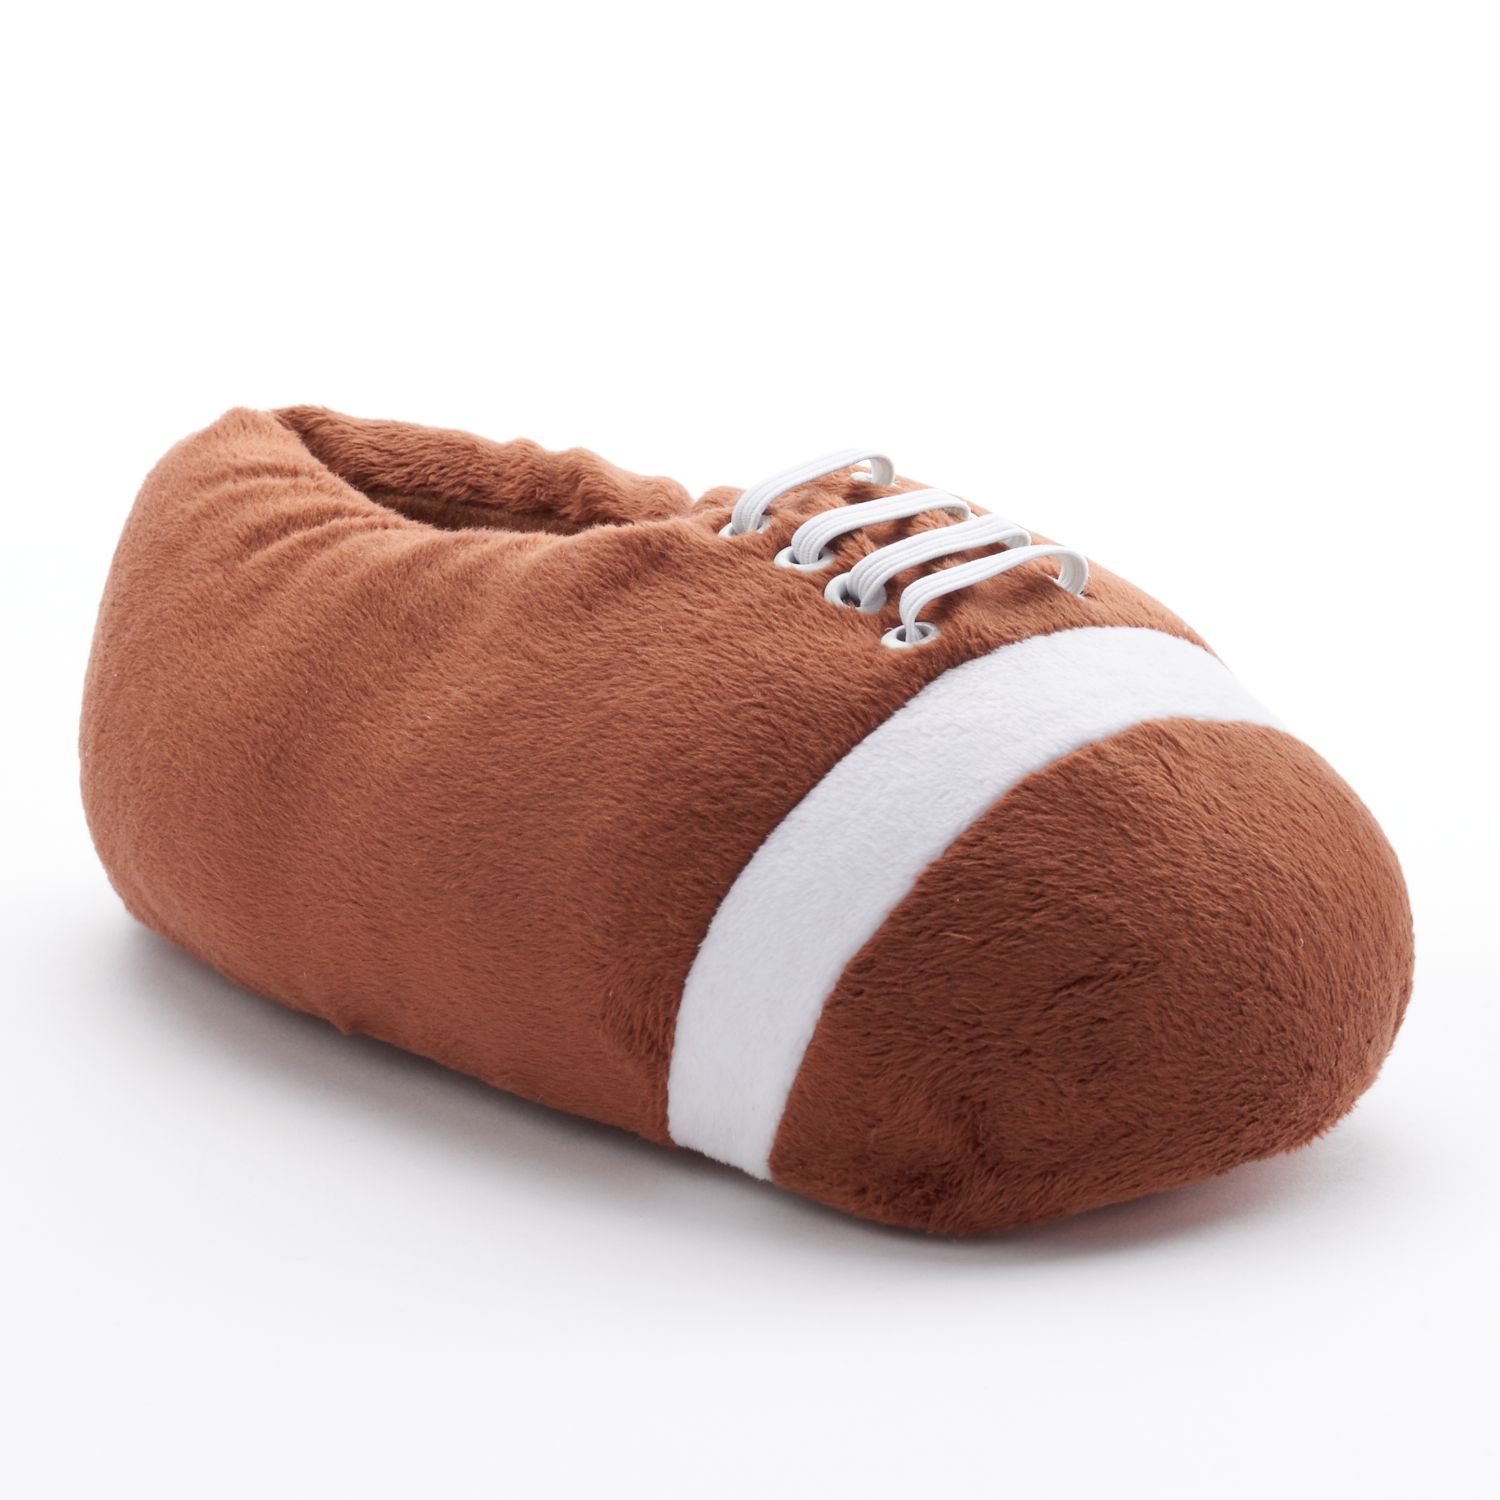 childrens football slippers